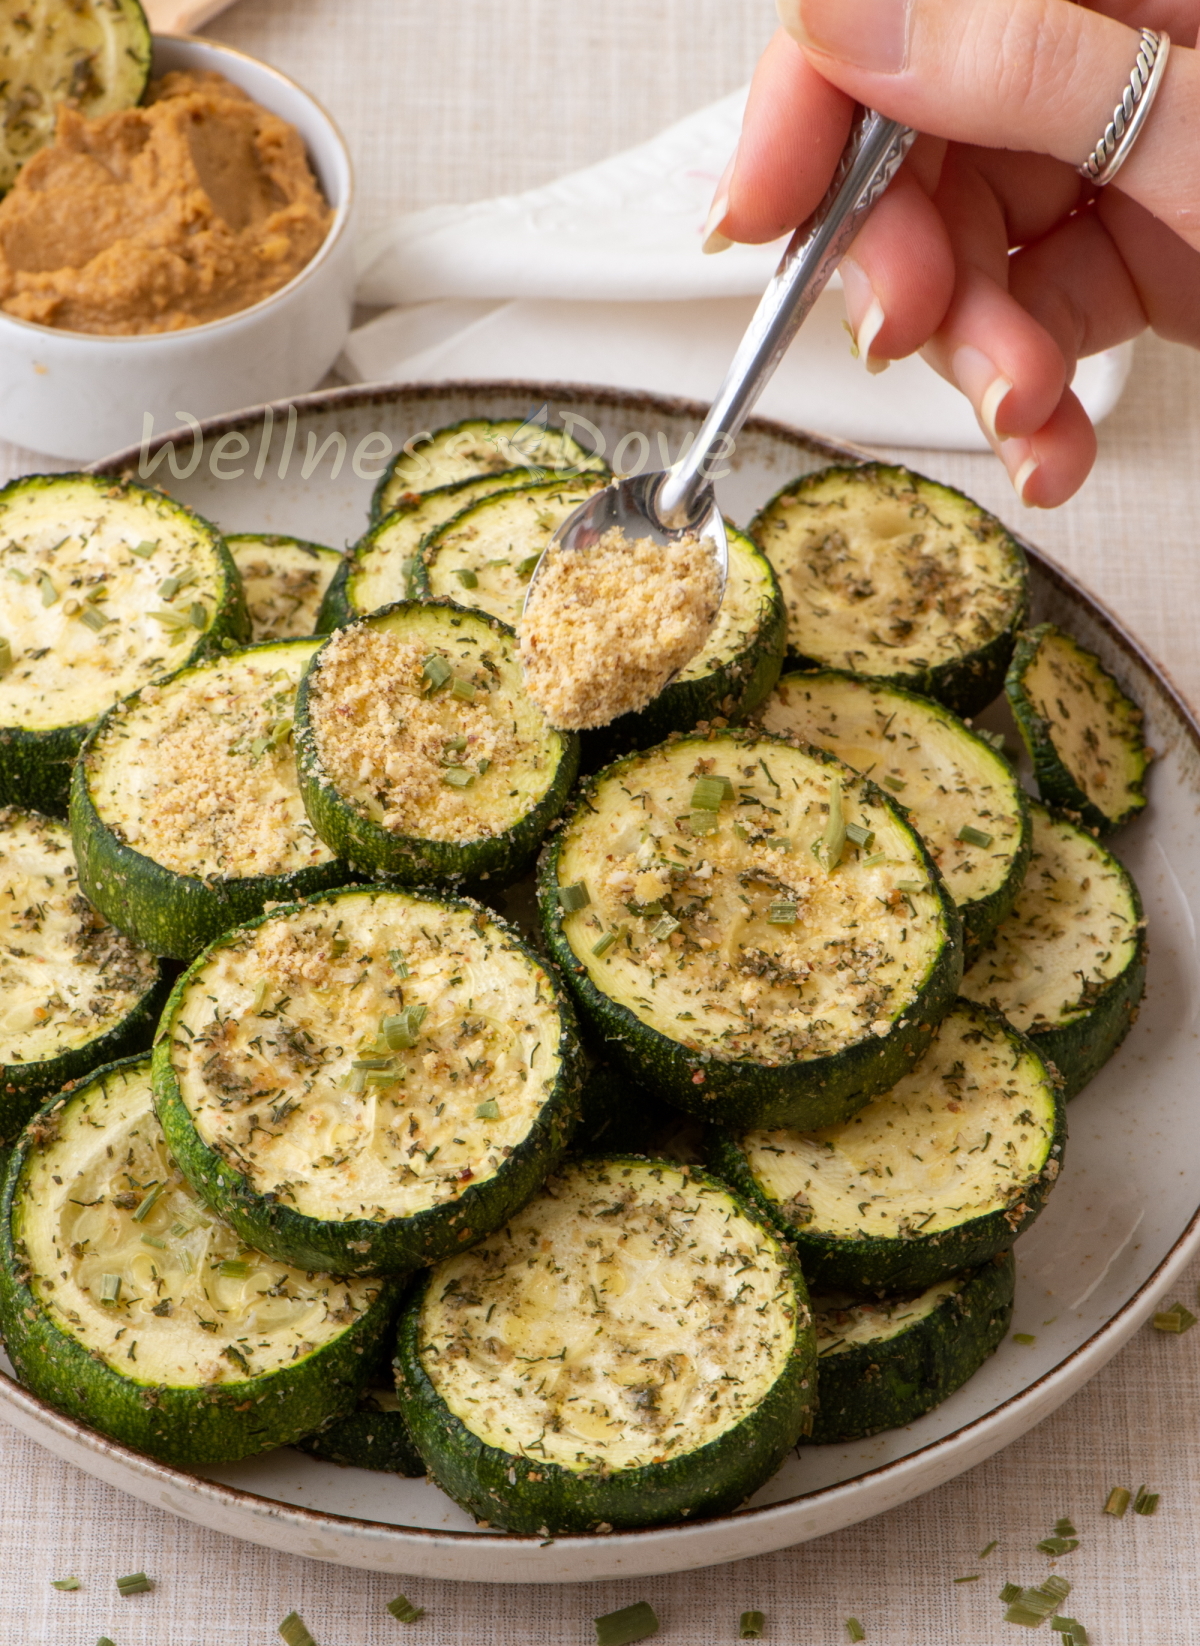 Zucchini Roasted in Oven (Vegan) | WellnessDove